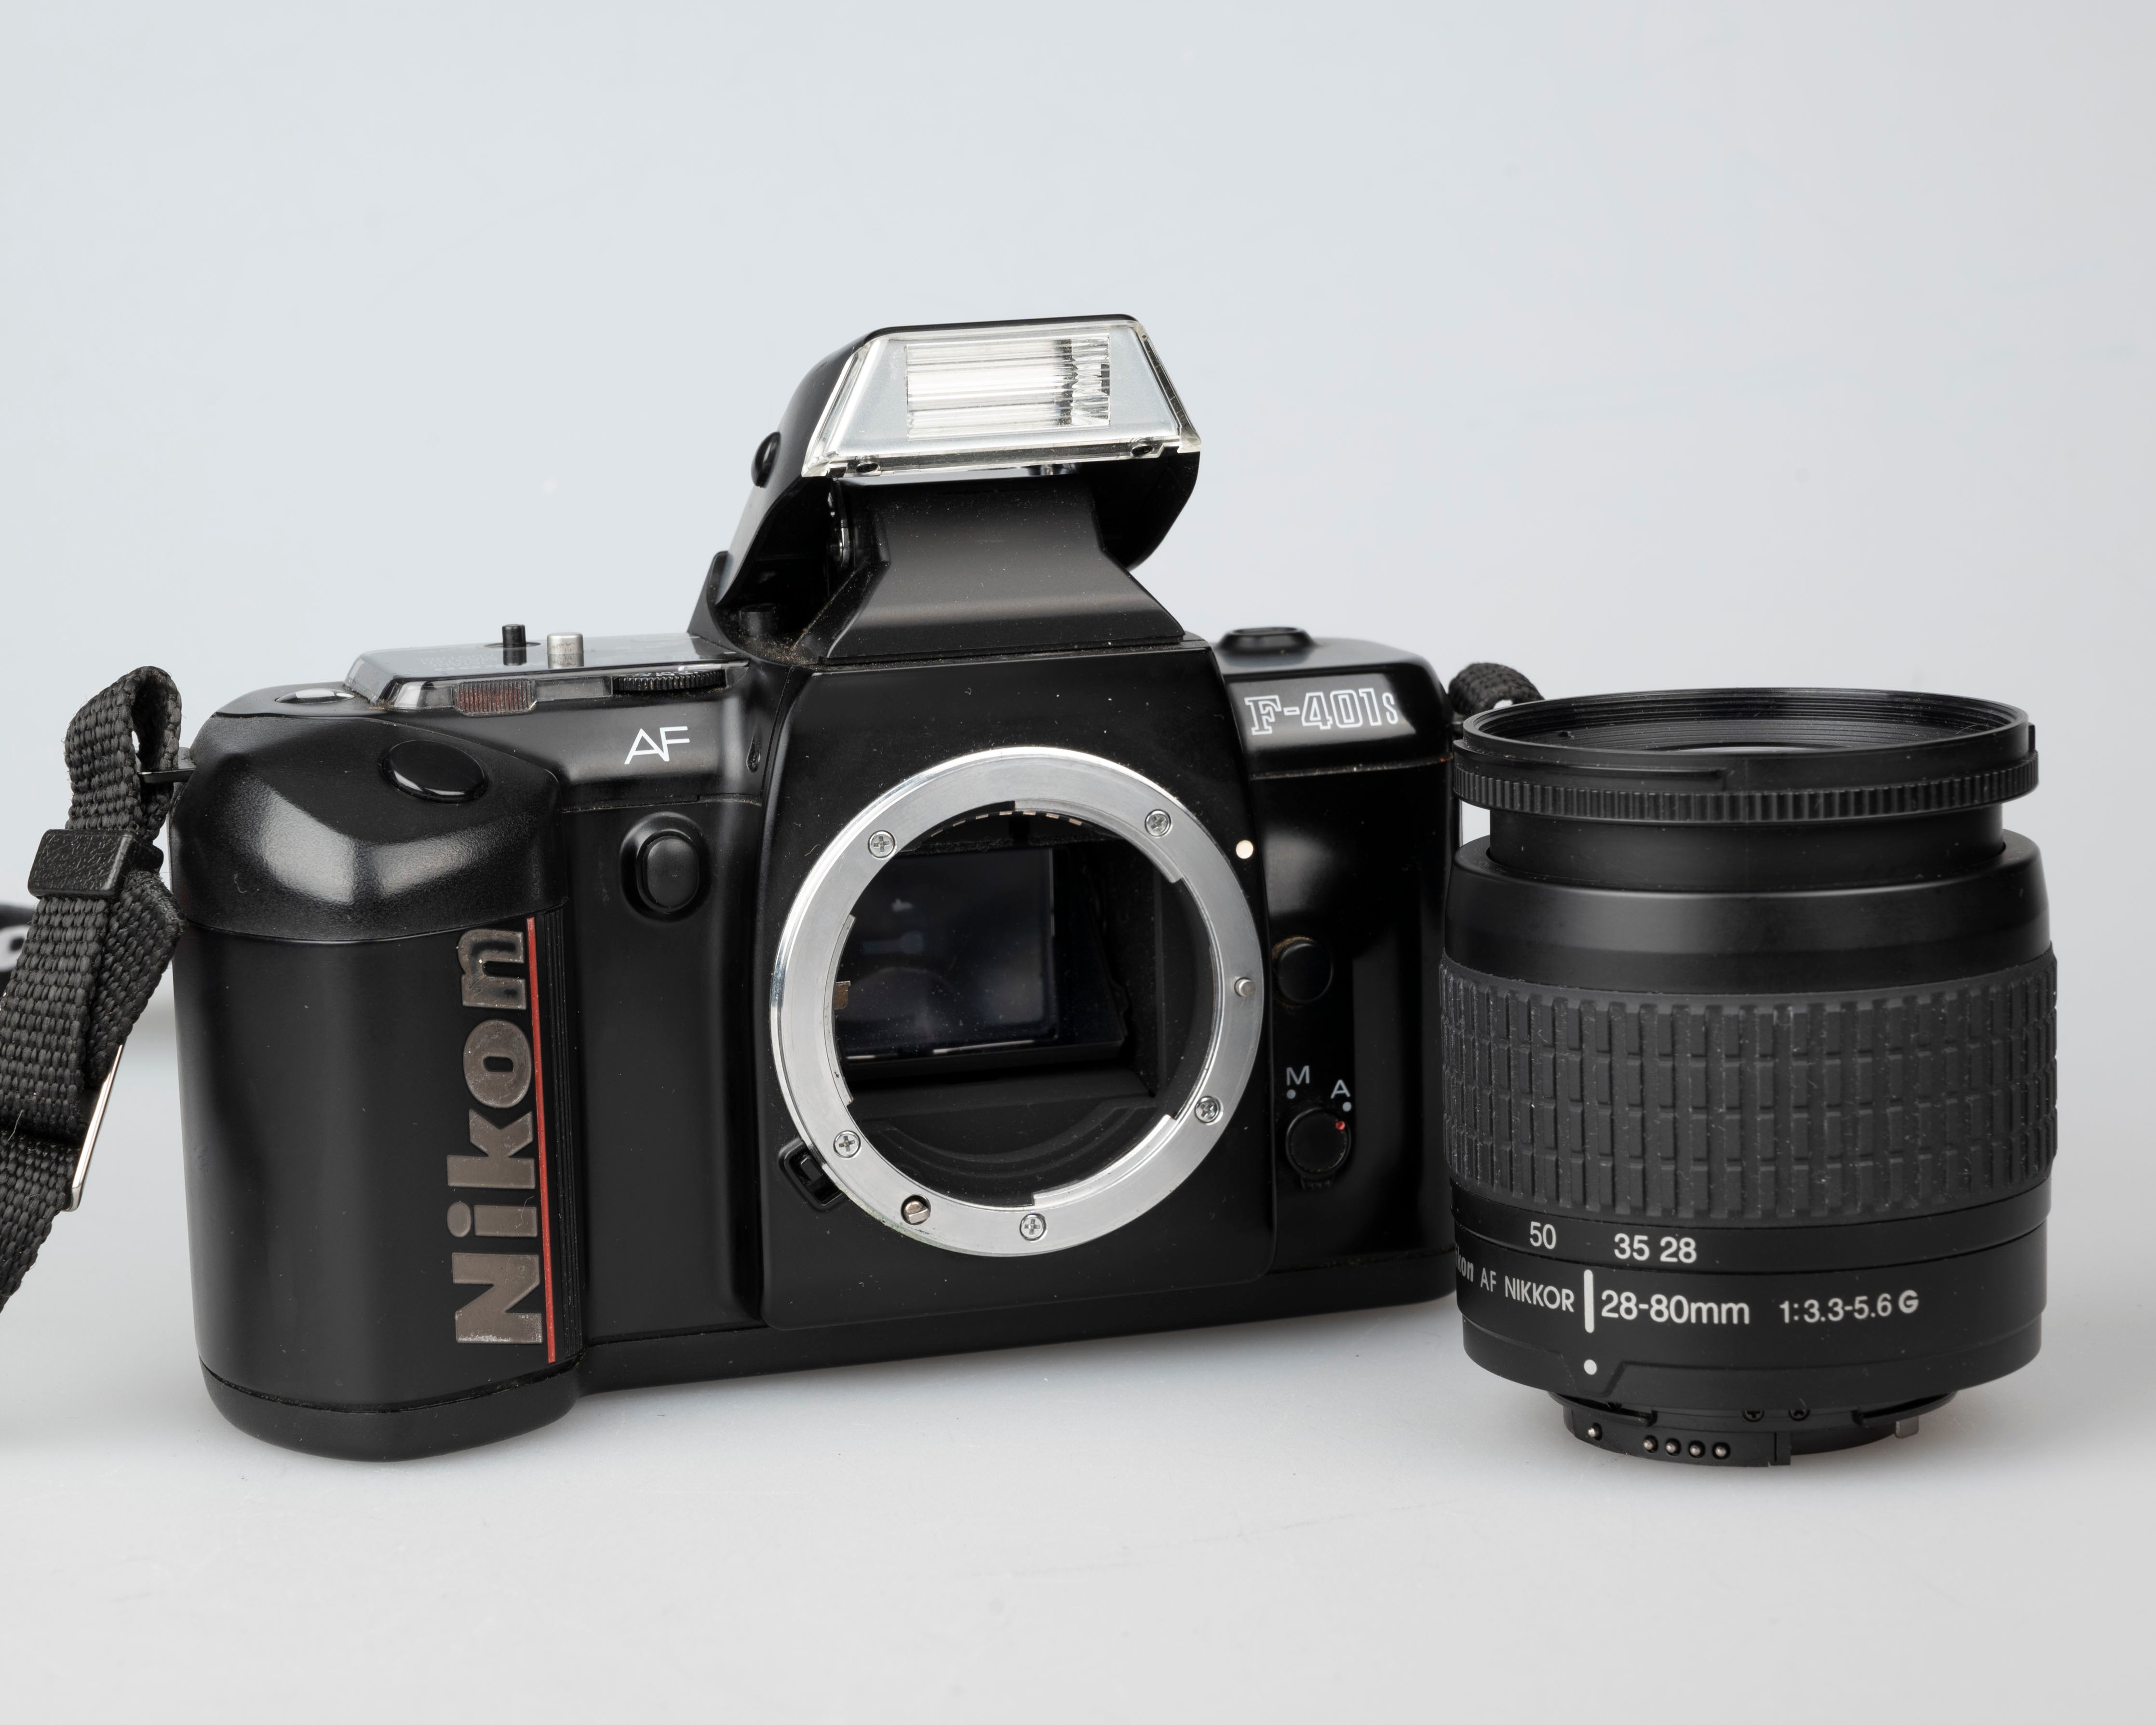 44567 Nikon ニコン F-401S カメラ 28-80mm 1:3.5-5.6 - カメラ、光学機器